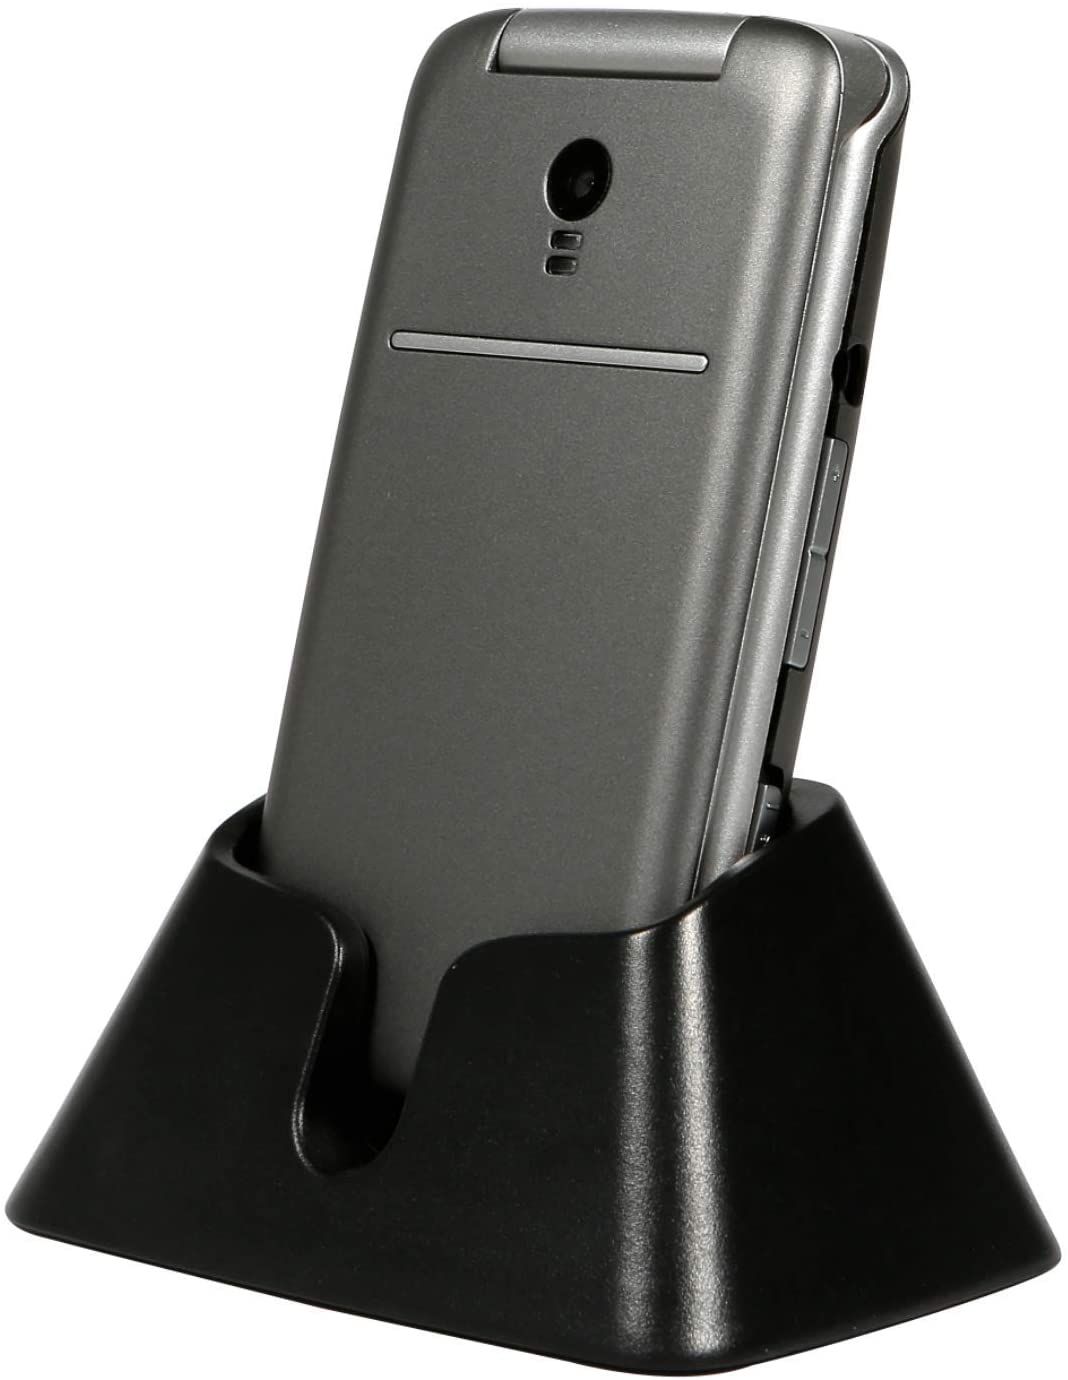 artfone 3G Unlocked Flip Phone